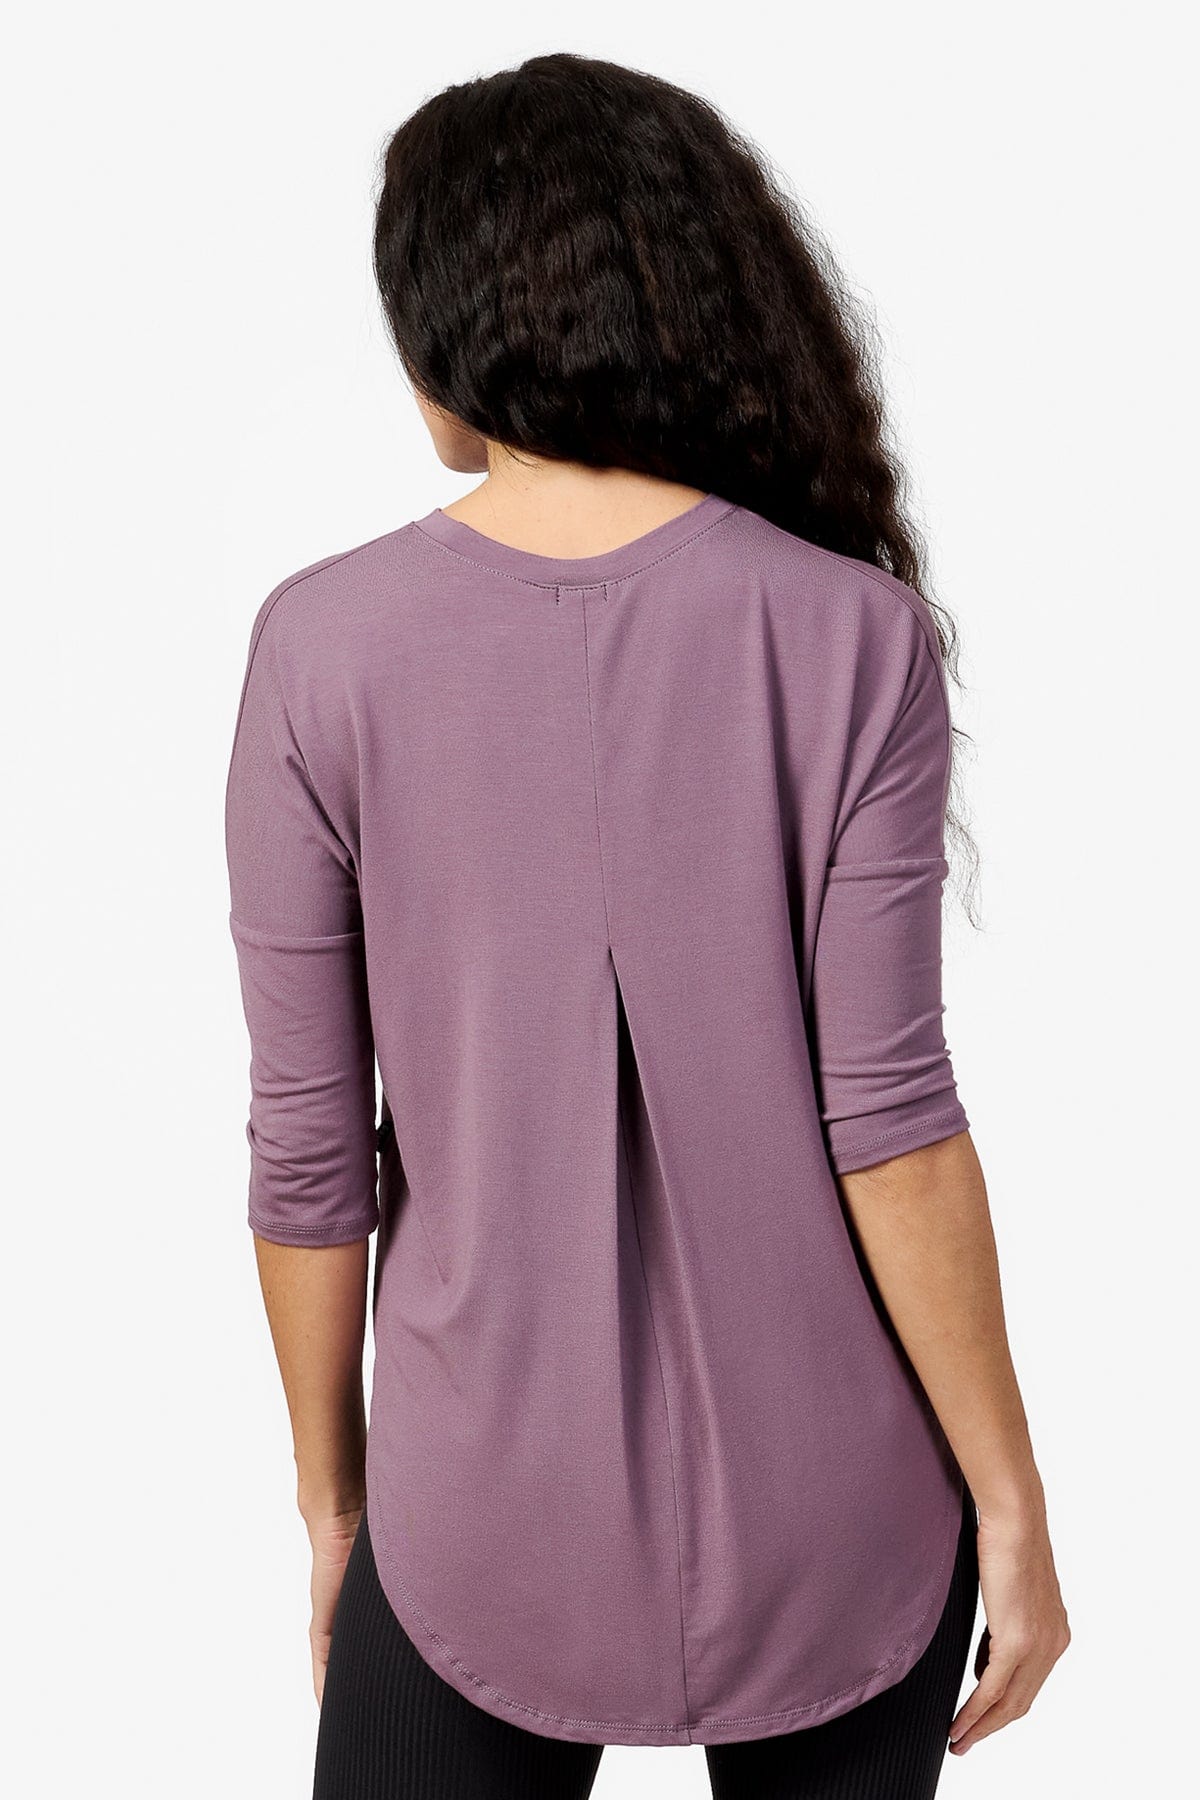 back of a woman wearing a light purple 3/4 length sleeve shirt